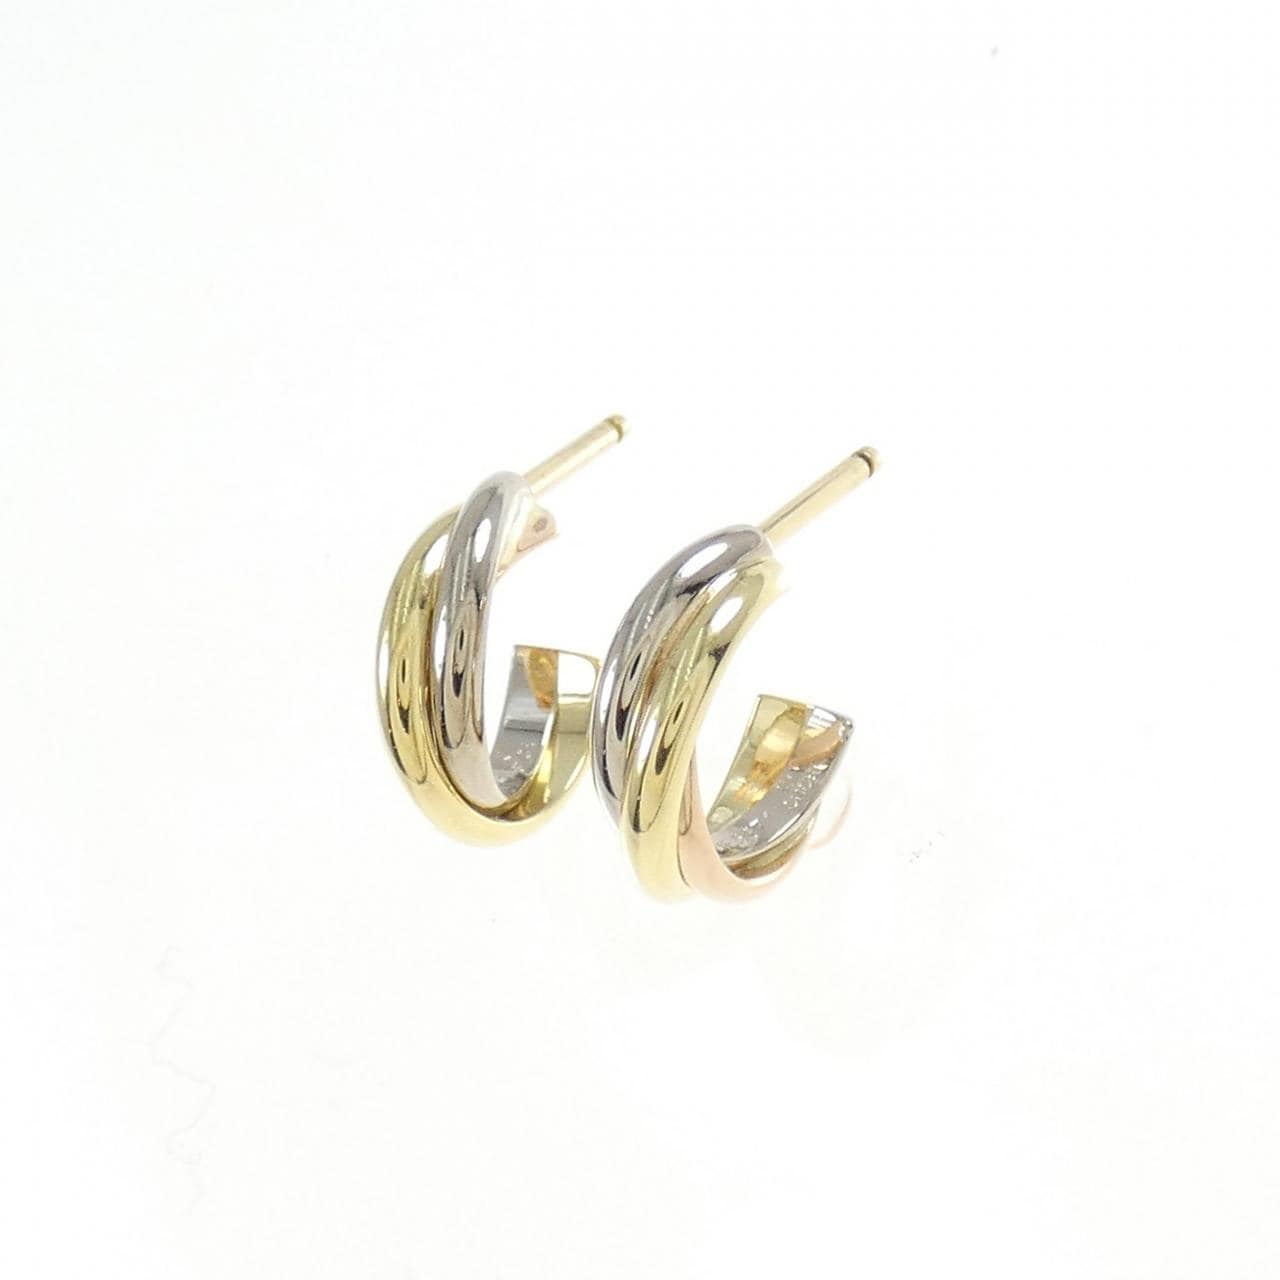 Cartier Trinity small earrings